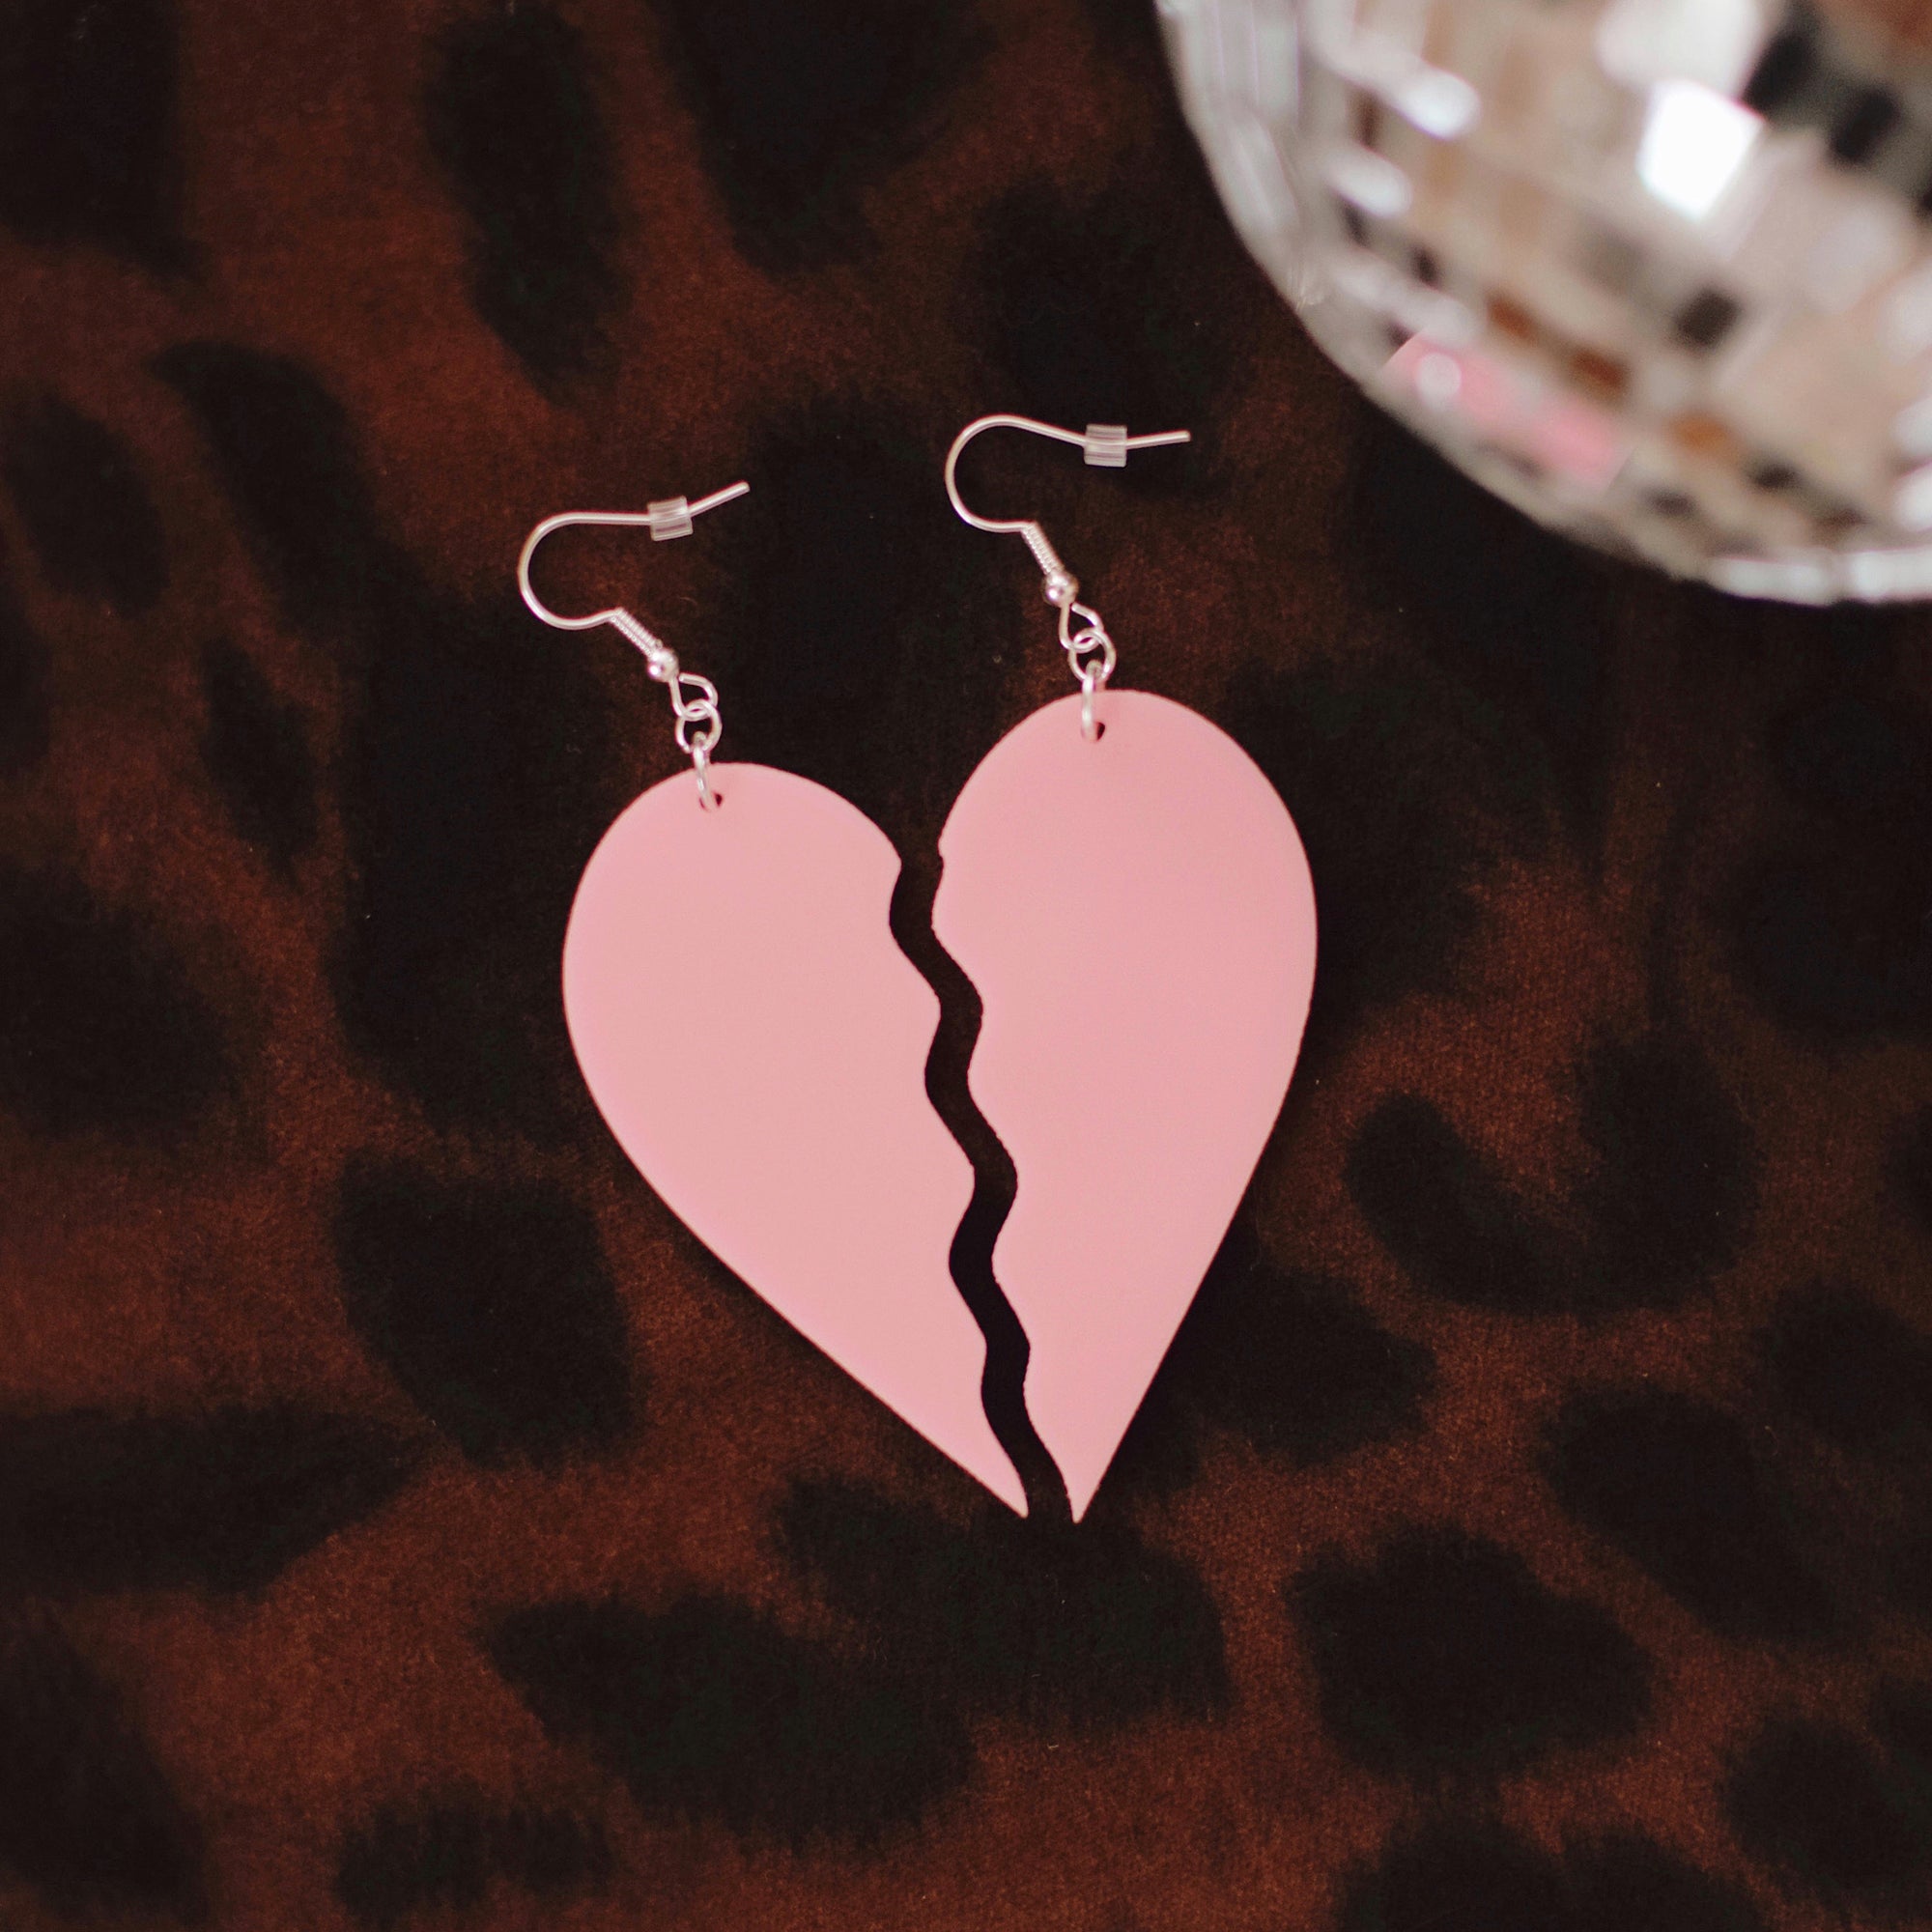 Squiggle Heart earrings